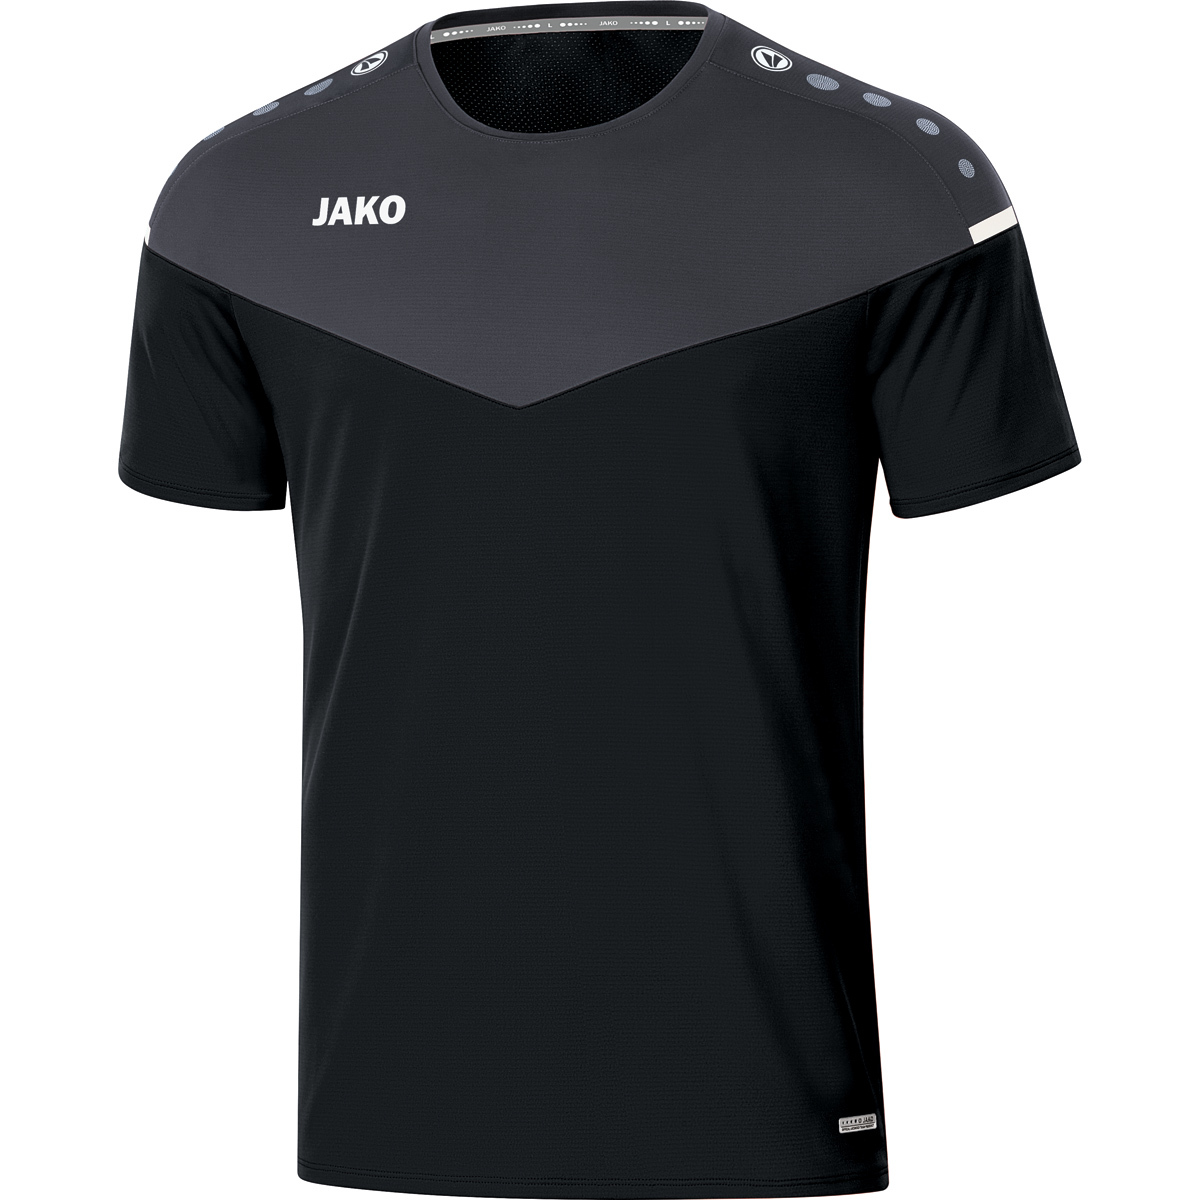 JAKO T-Shirt Champ 2.0 Herren, 6120 schwarz/anthrazit, XXL, Gr